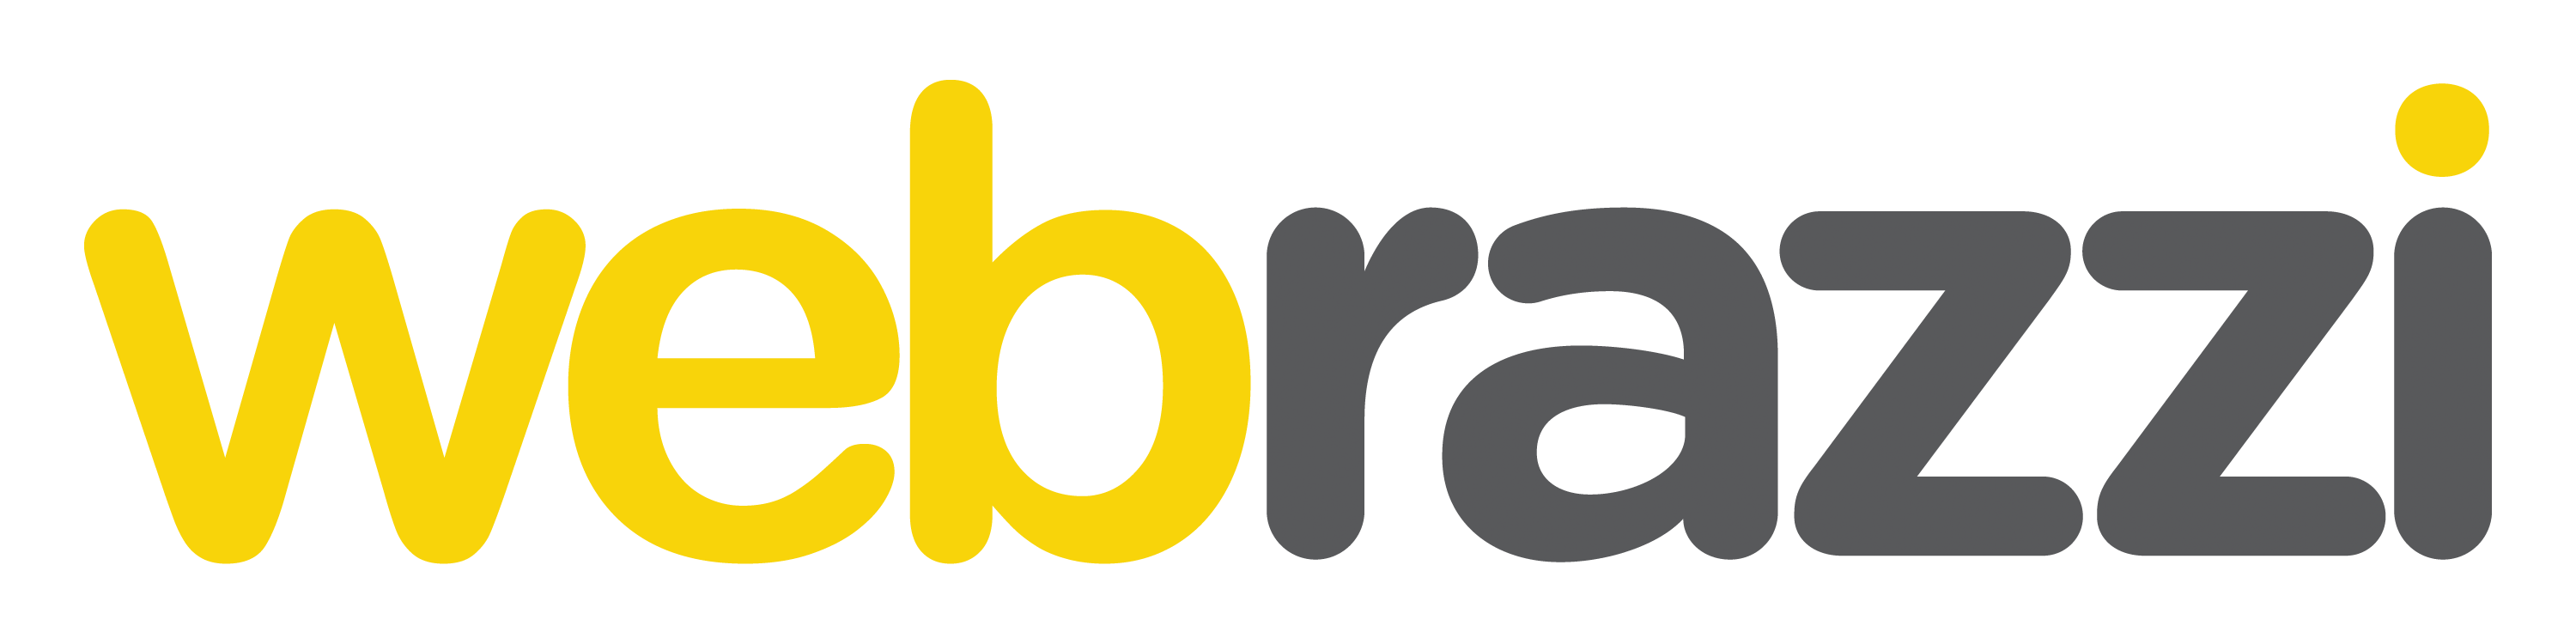 webrazzi logo